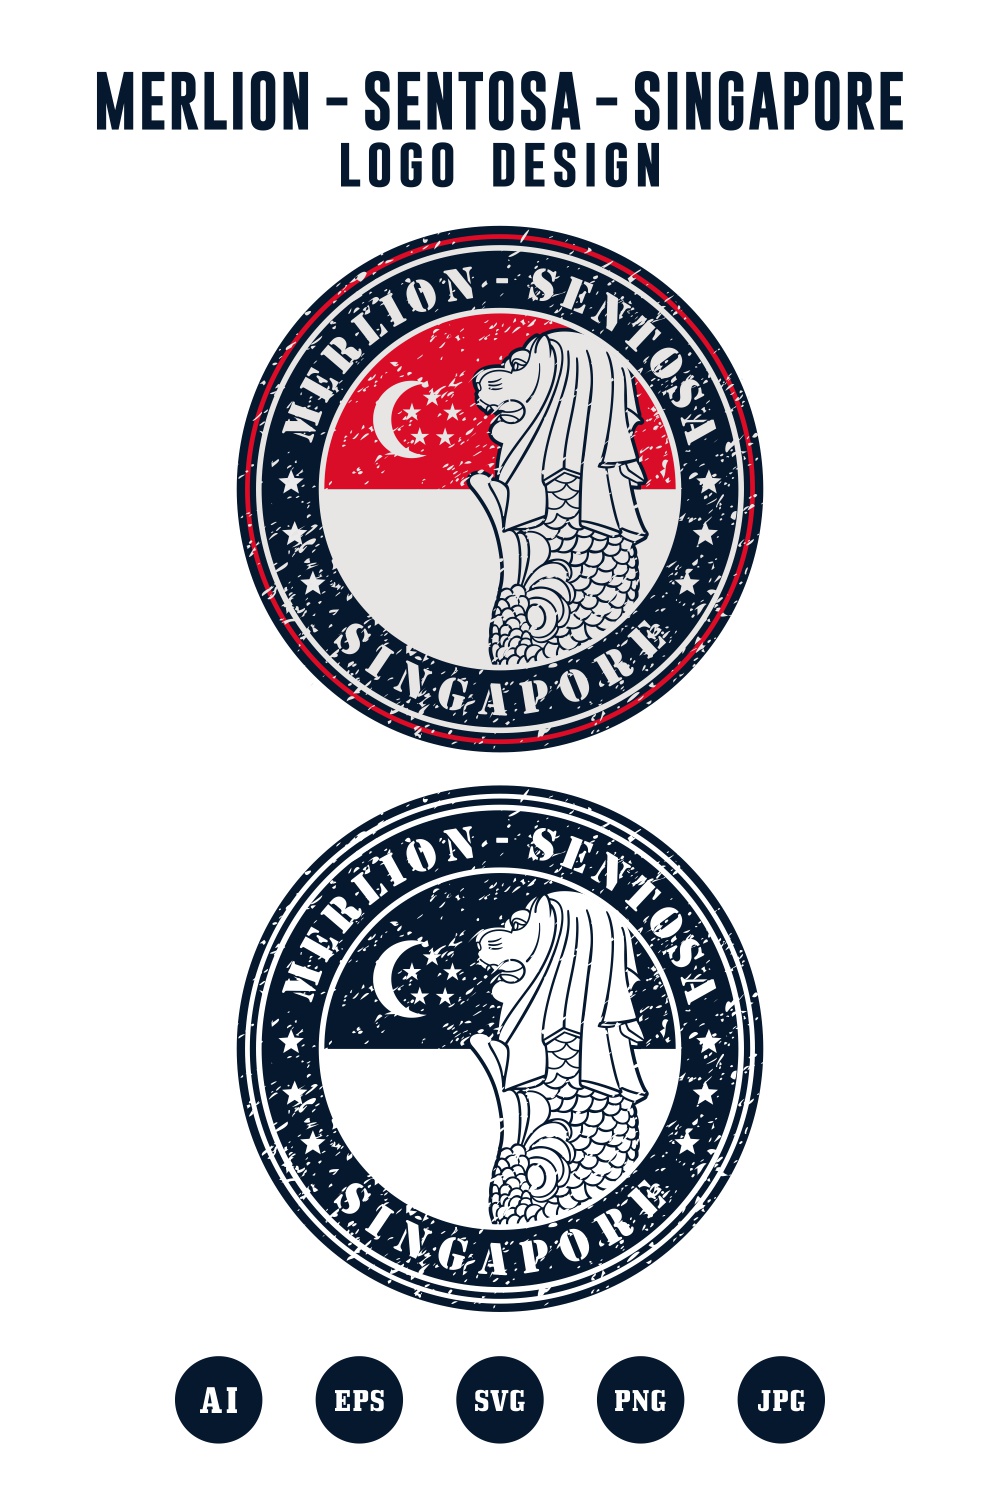 Merlion sentosa singapore logo design collection - $4 pinterest preview image.